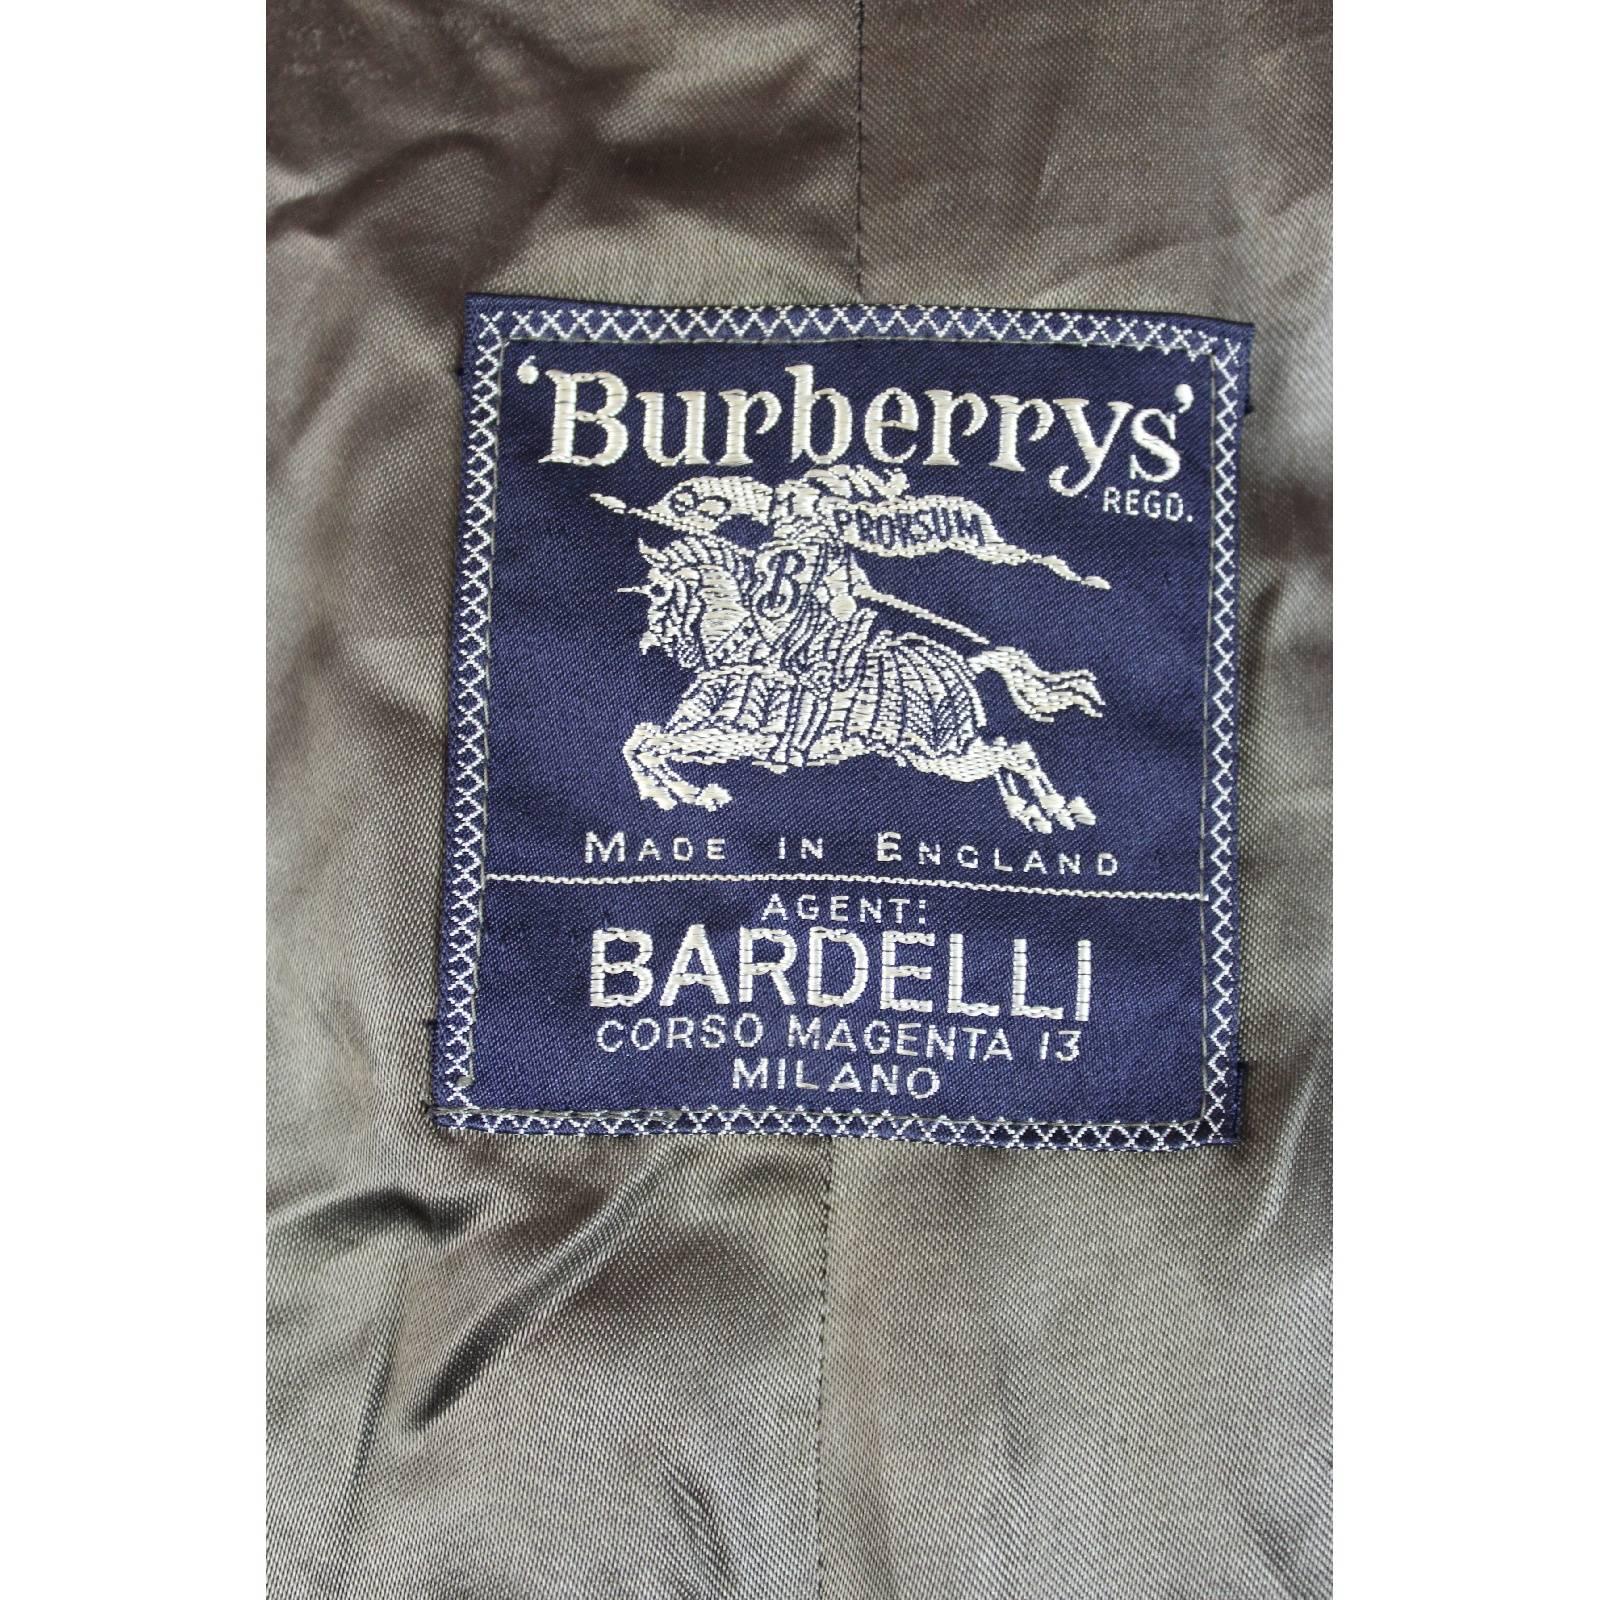 Burberry 1980s trench coat men's beige size 38 reg raincoat long vintage 1